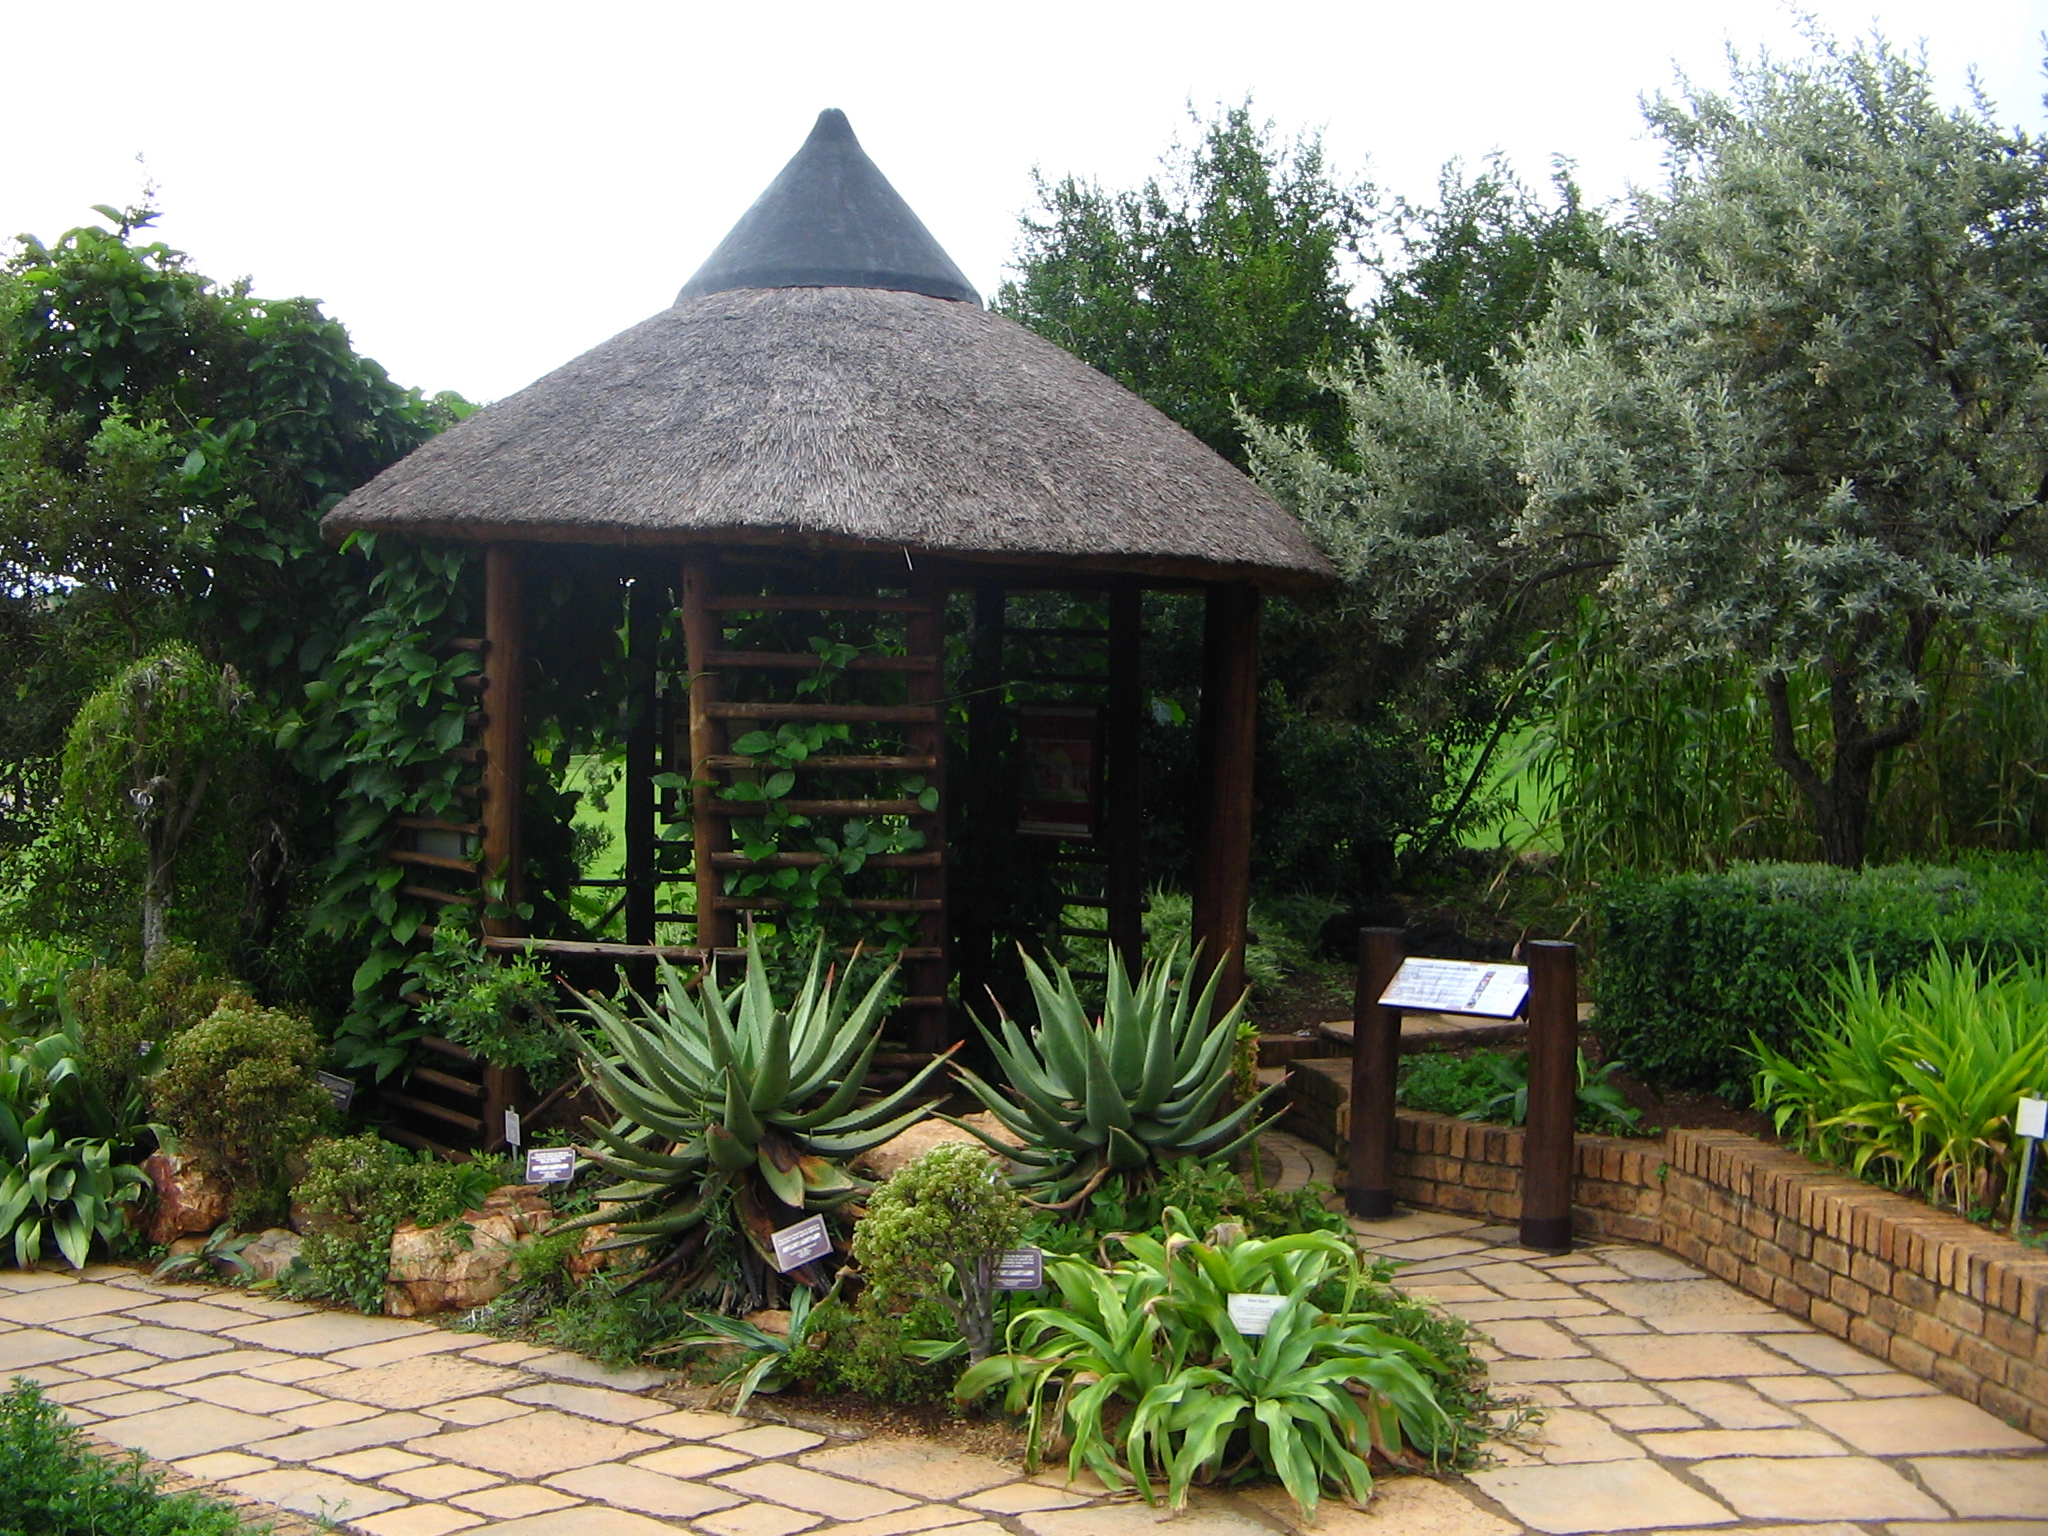 File:Walter Sisulu National Botanical Garden - hut.jpg - Wikipedia